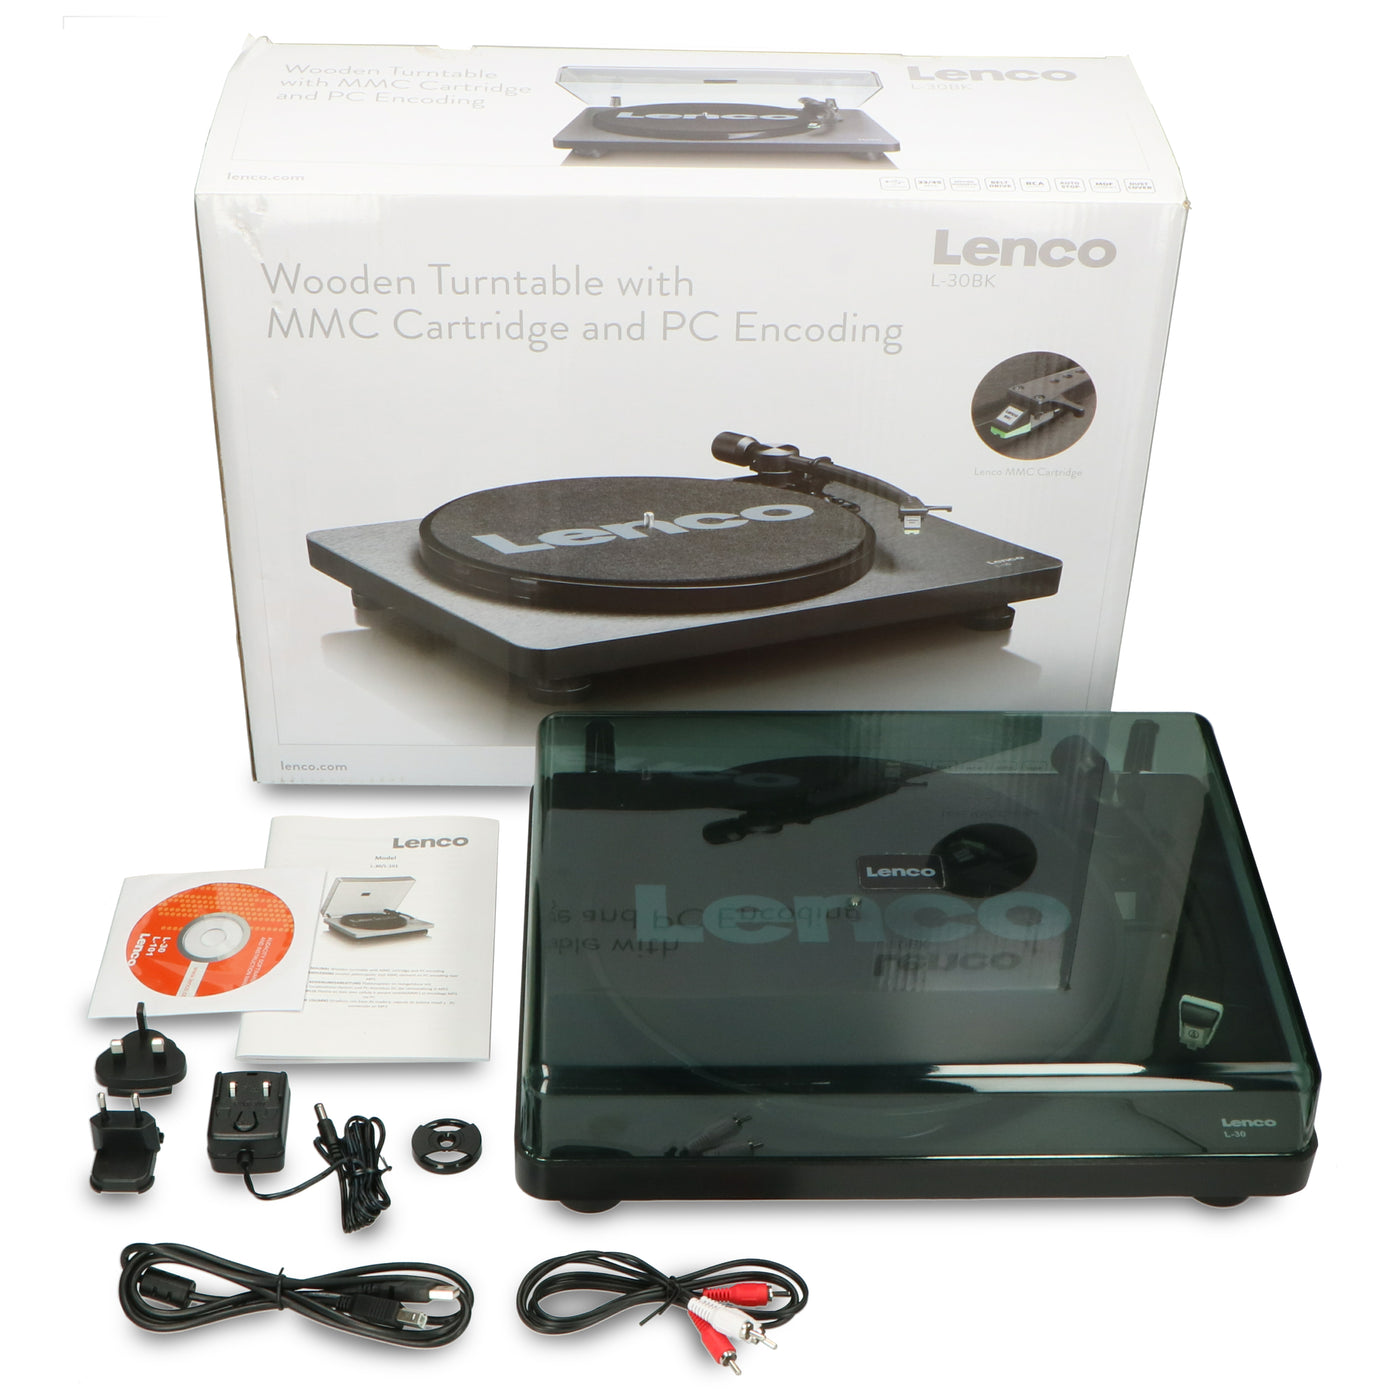 Lenco L-30 kaufen? | – offiziellen Lenco.de Offizieller Jetzt Lenco Webshop im Webshop 